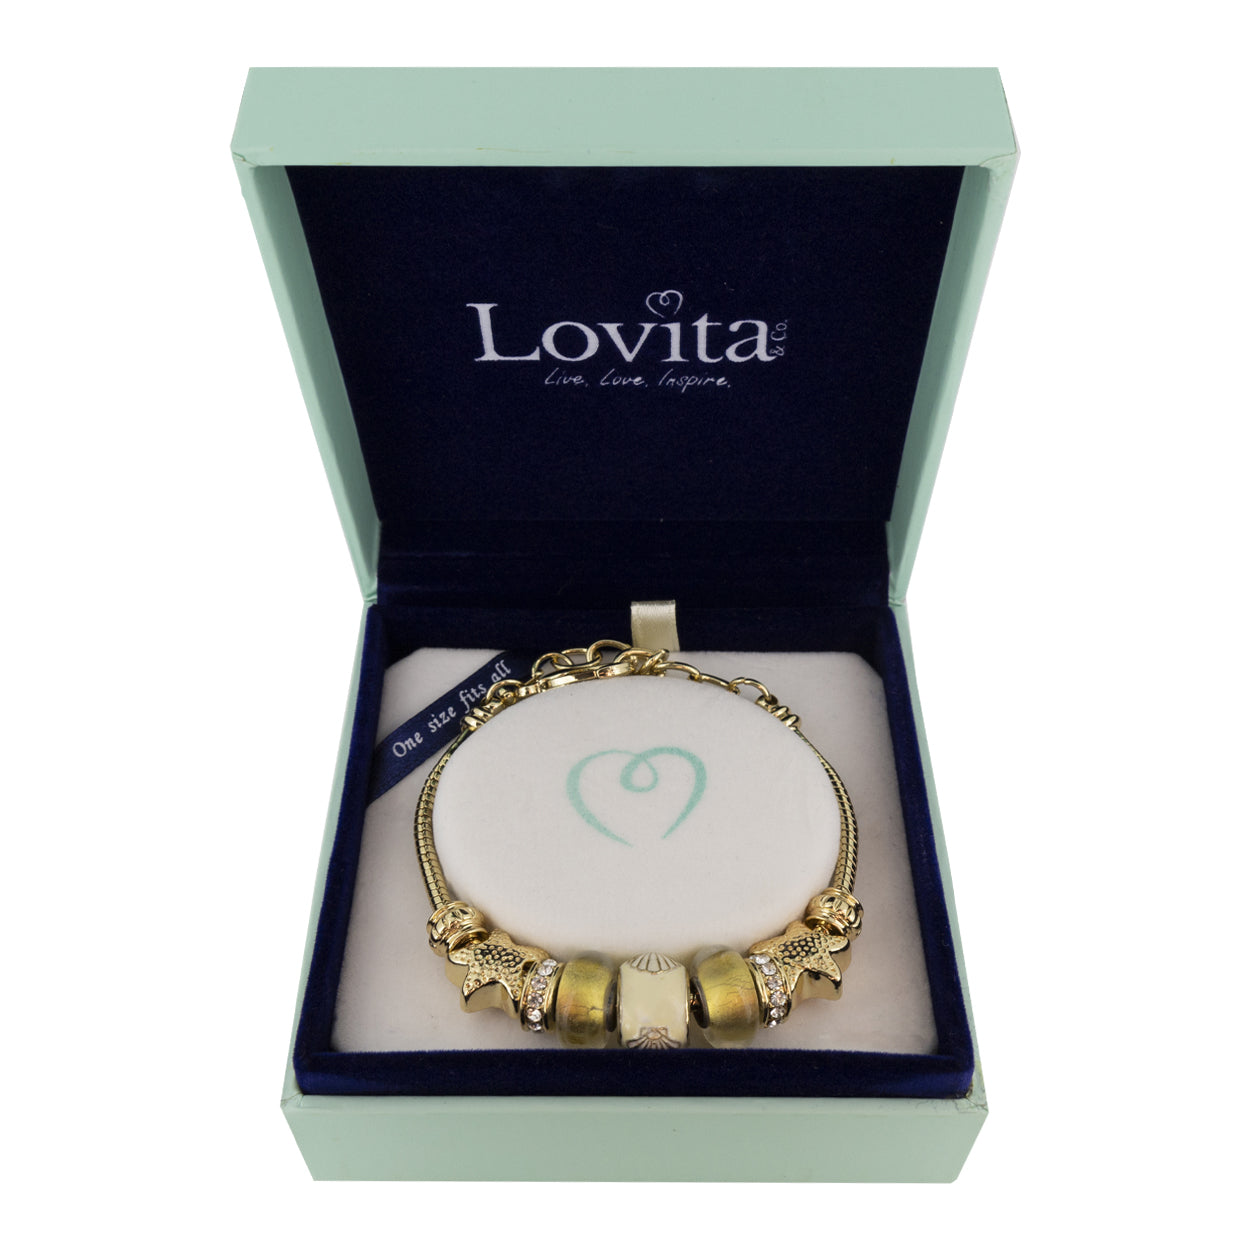 Lovita Charm Bracelet Gold Star 